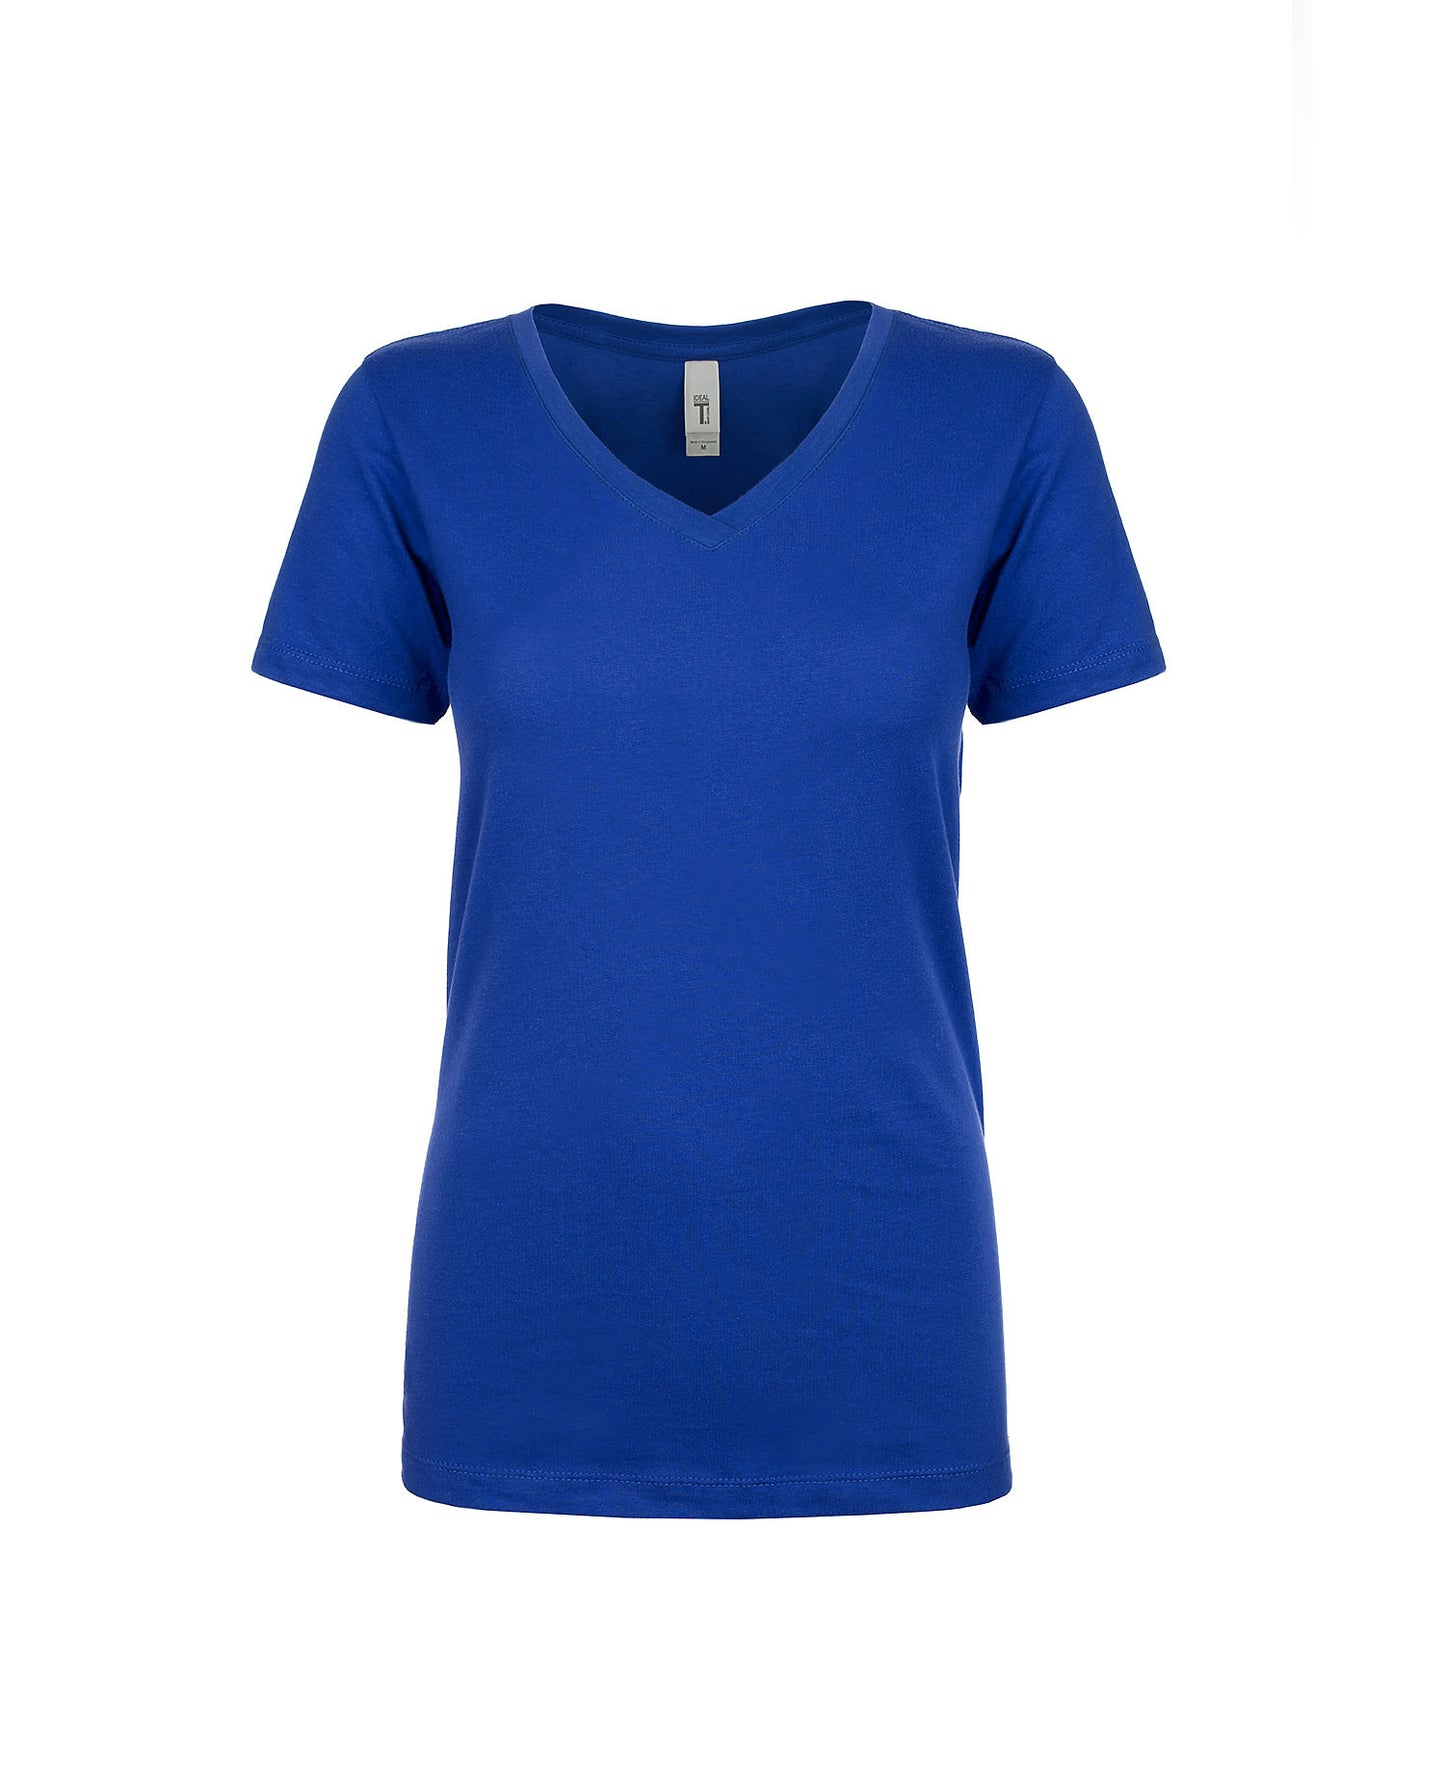 Next Level Ideal V Neck T Shirt in Indigo Blue